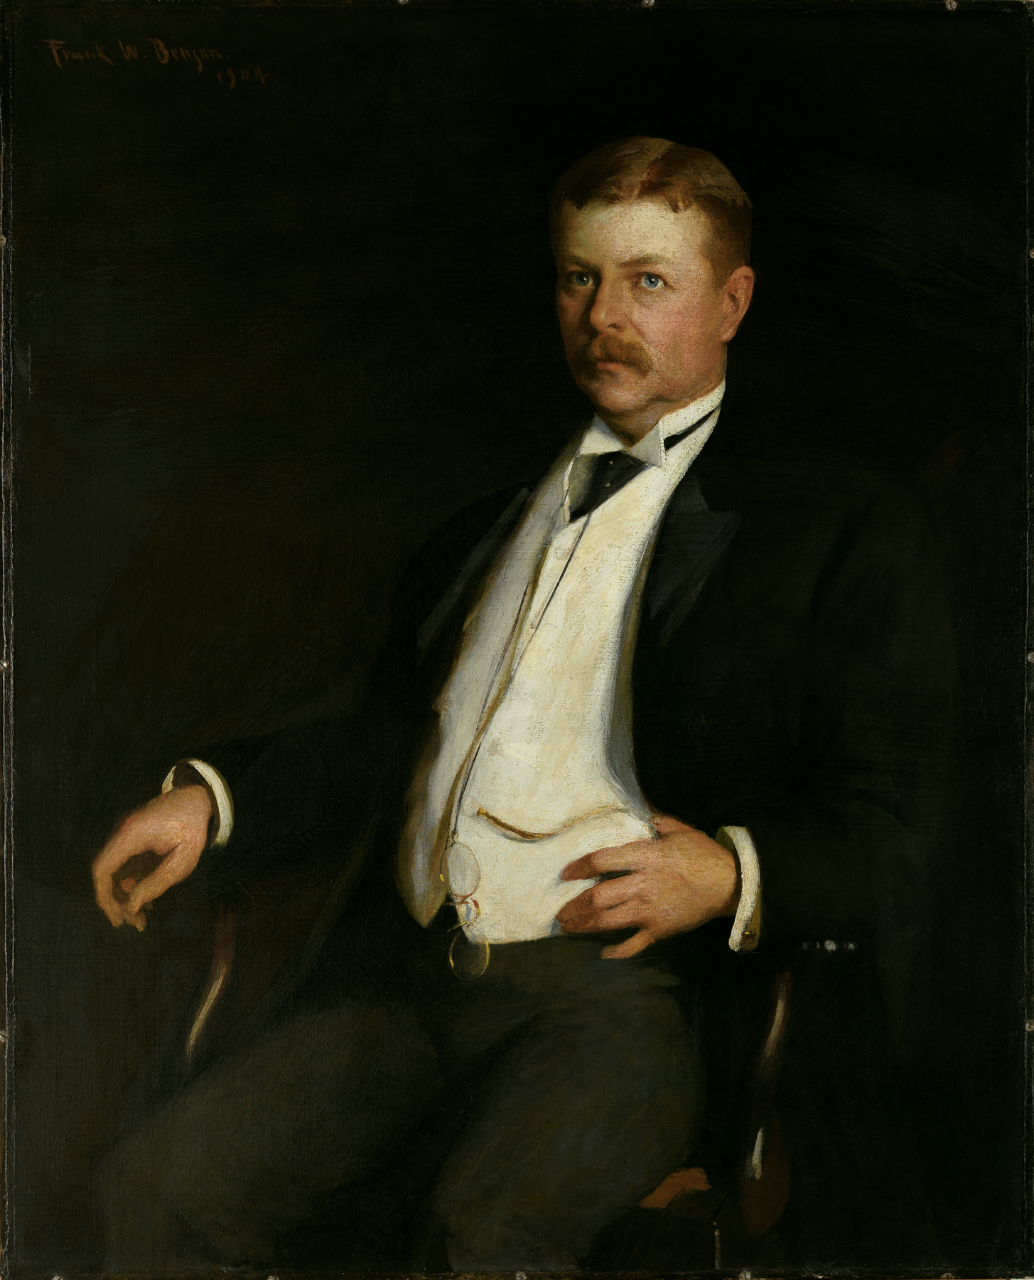 Portrait of Secretary of the Navy William Henry Moody